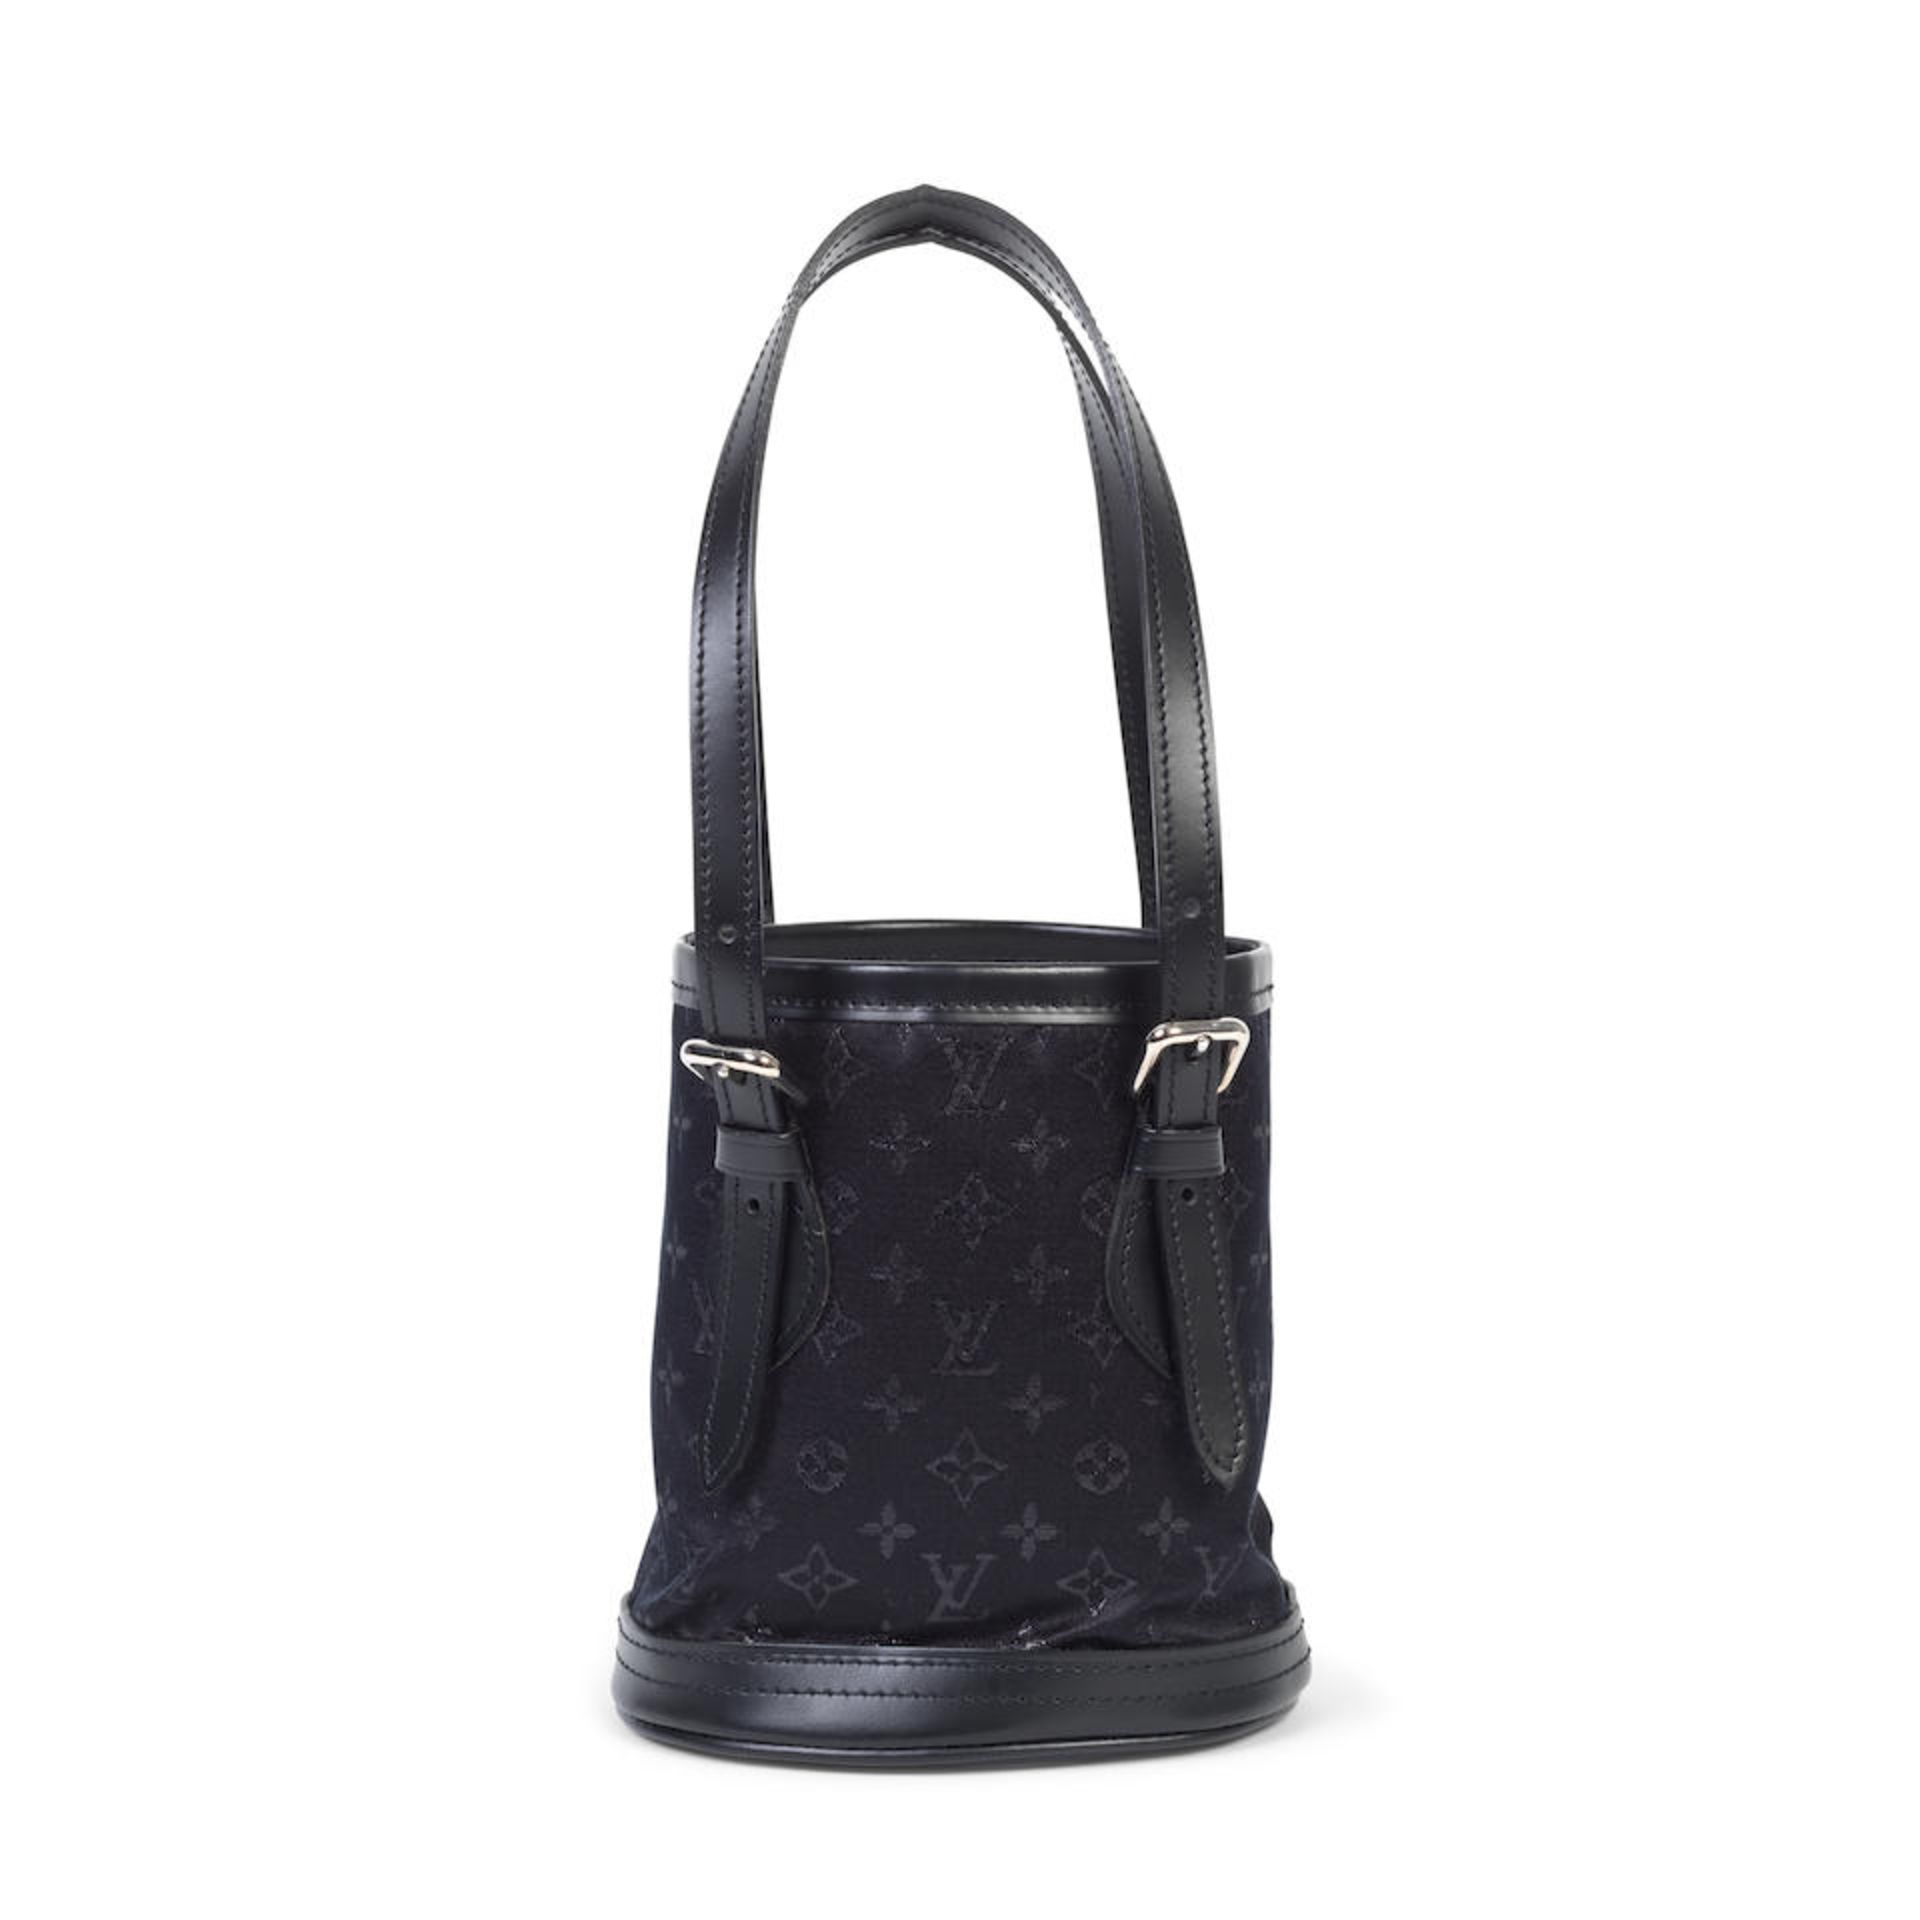 Louis Vuitton: a Black Satin Monogram Nano Bucket Bag 2001 (includes dust bag)